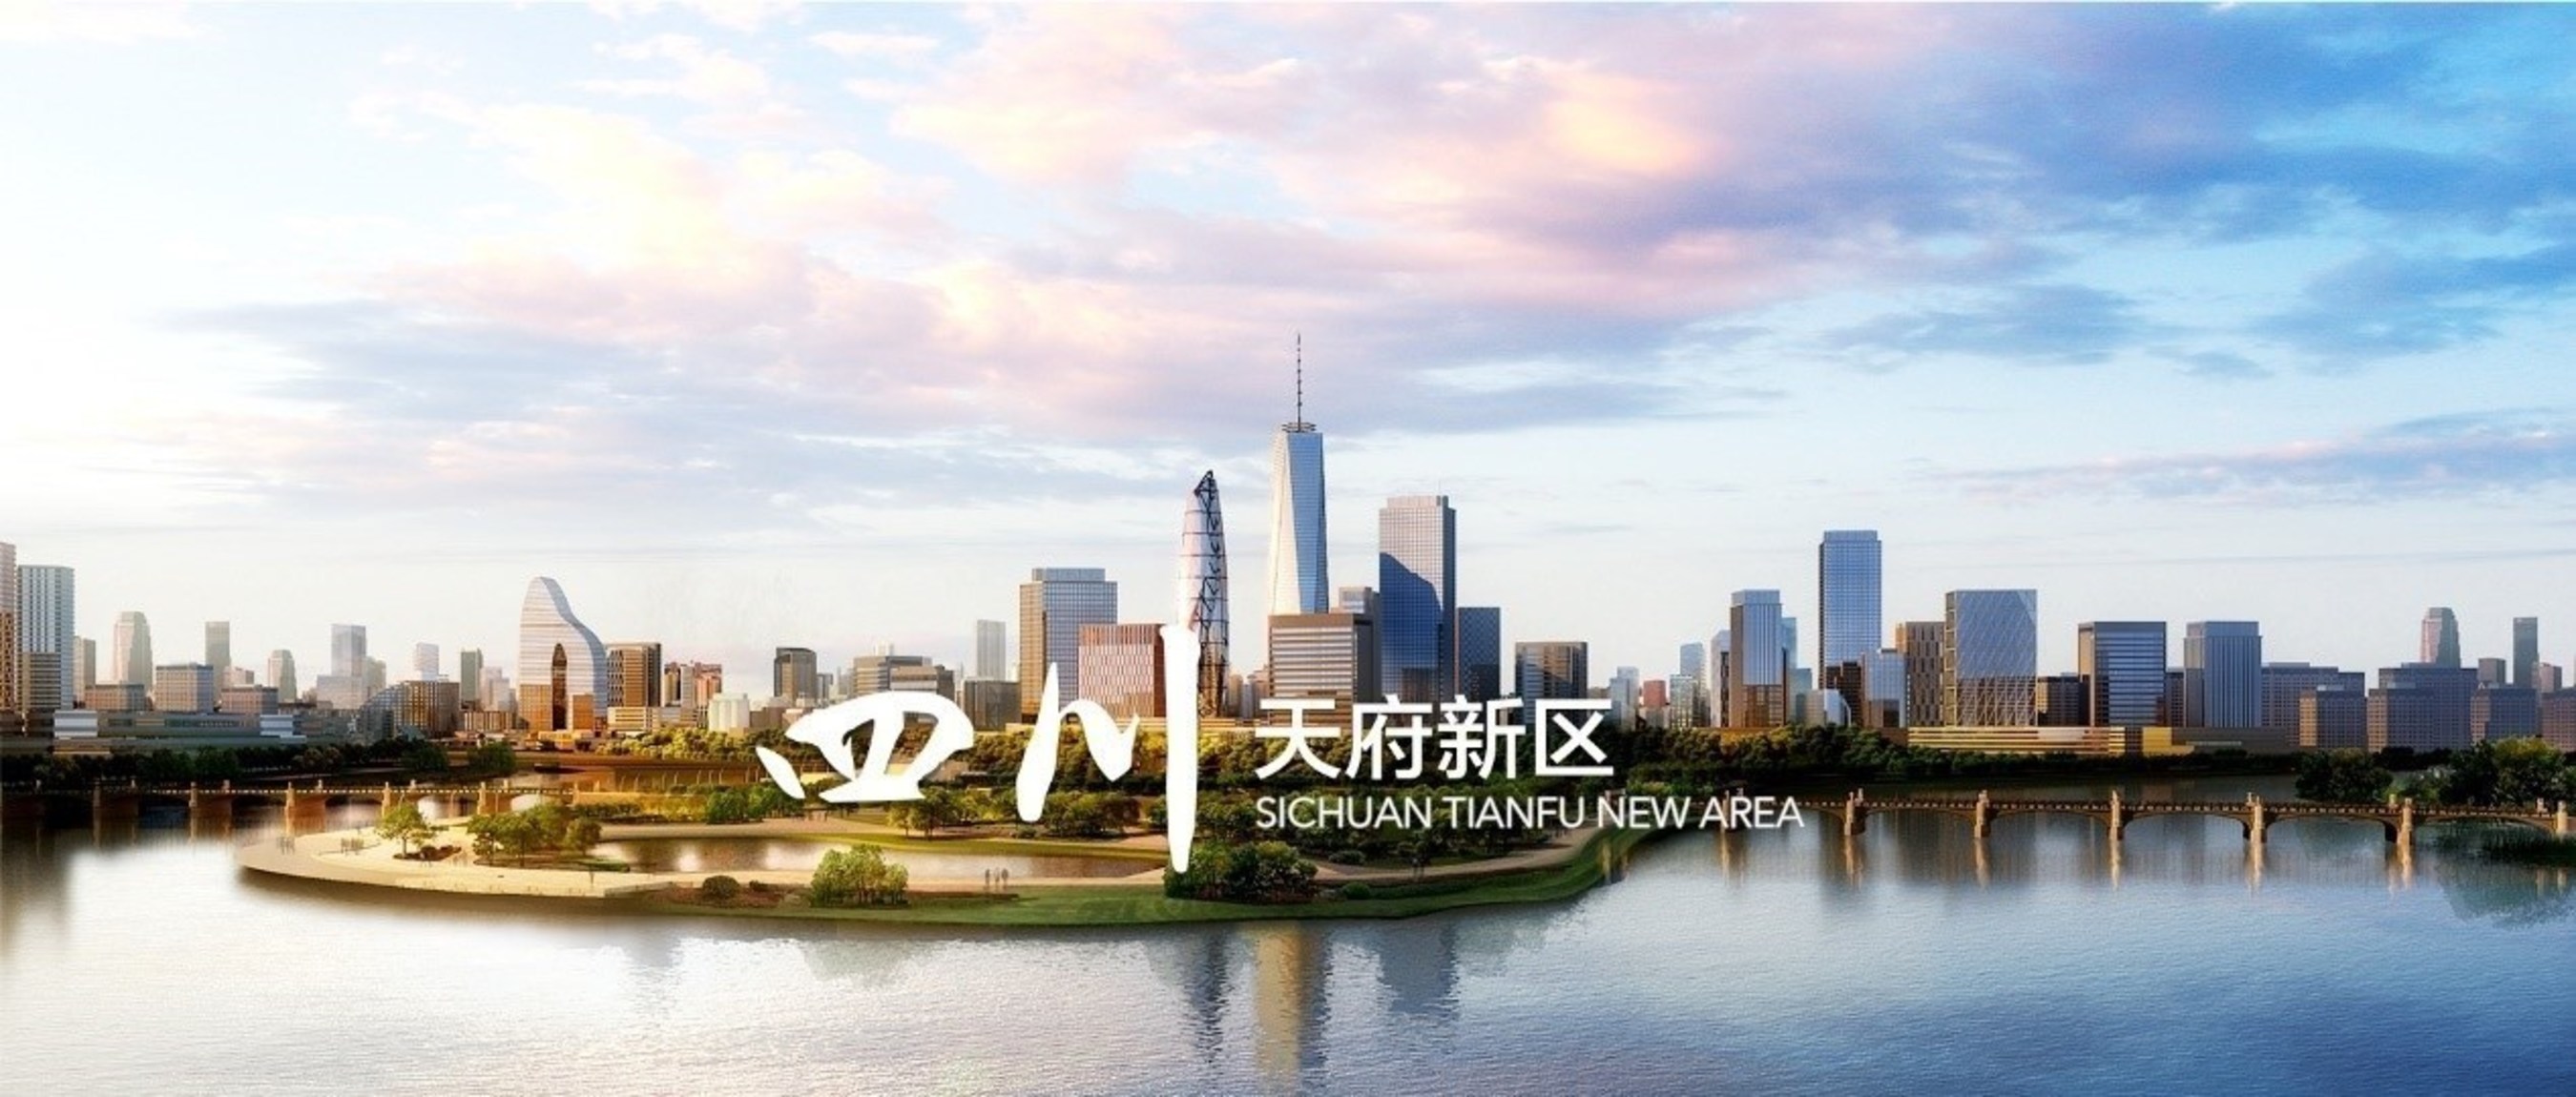 Global Solicitation For Proposals For Sichuan Tianfu New Area Logo Design